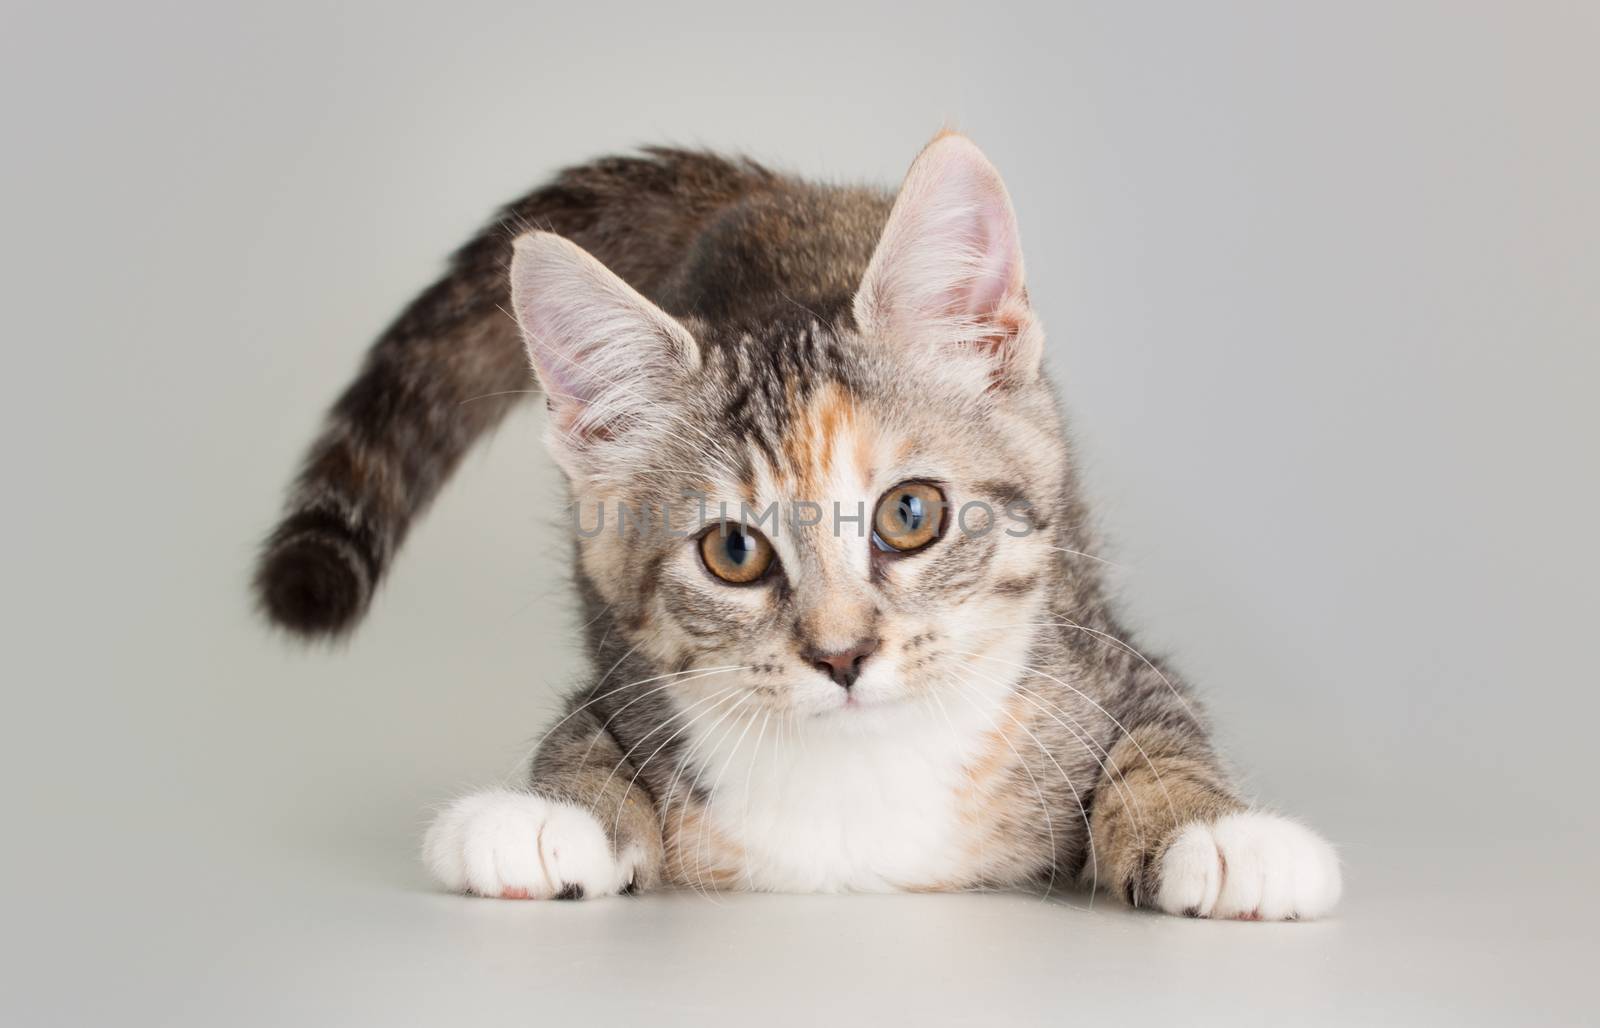 Cute kittent as a domestic animal pet portrait